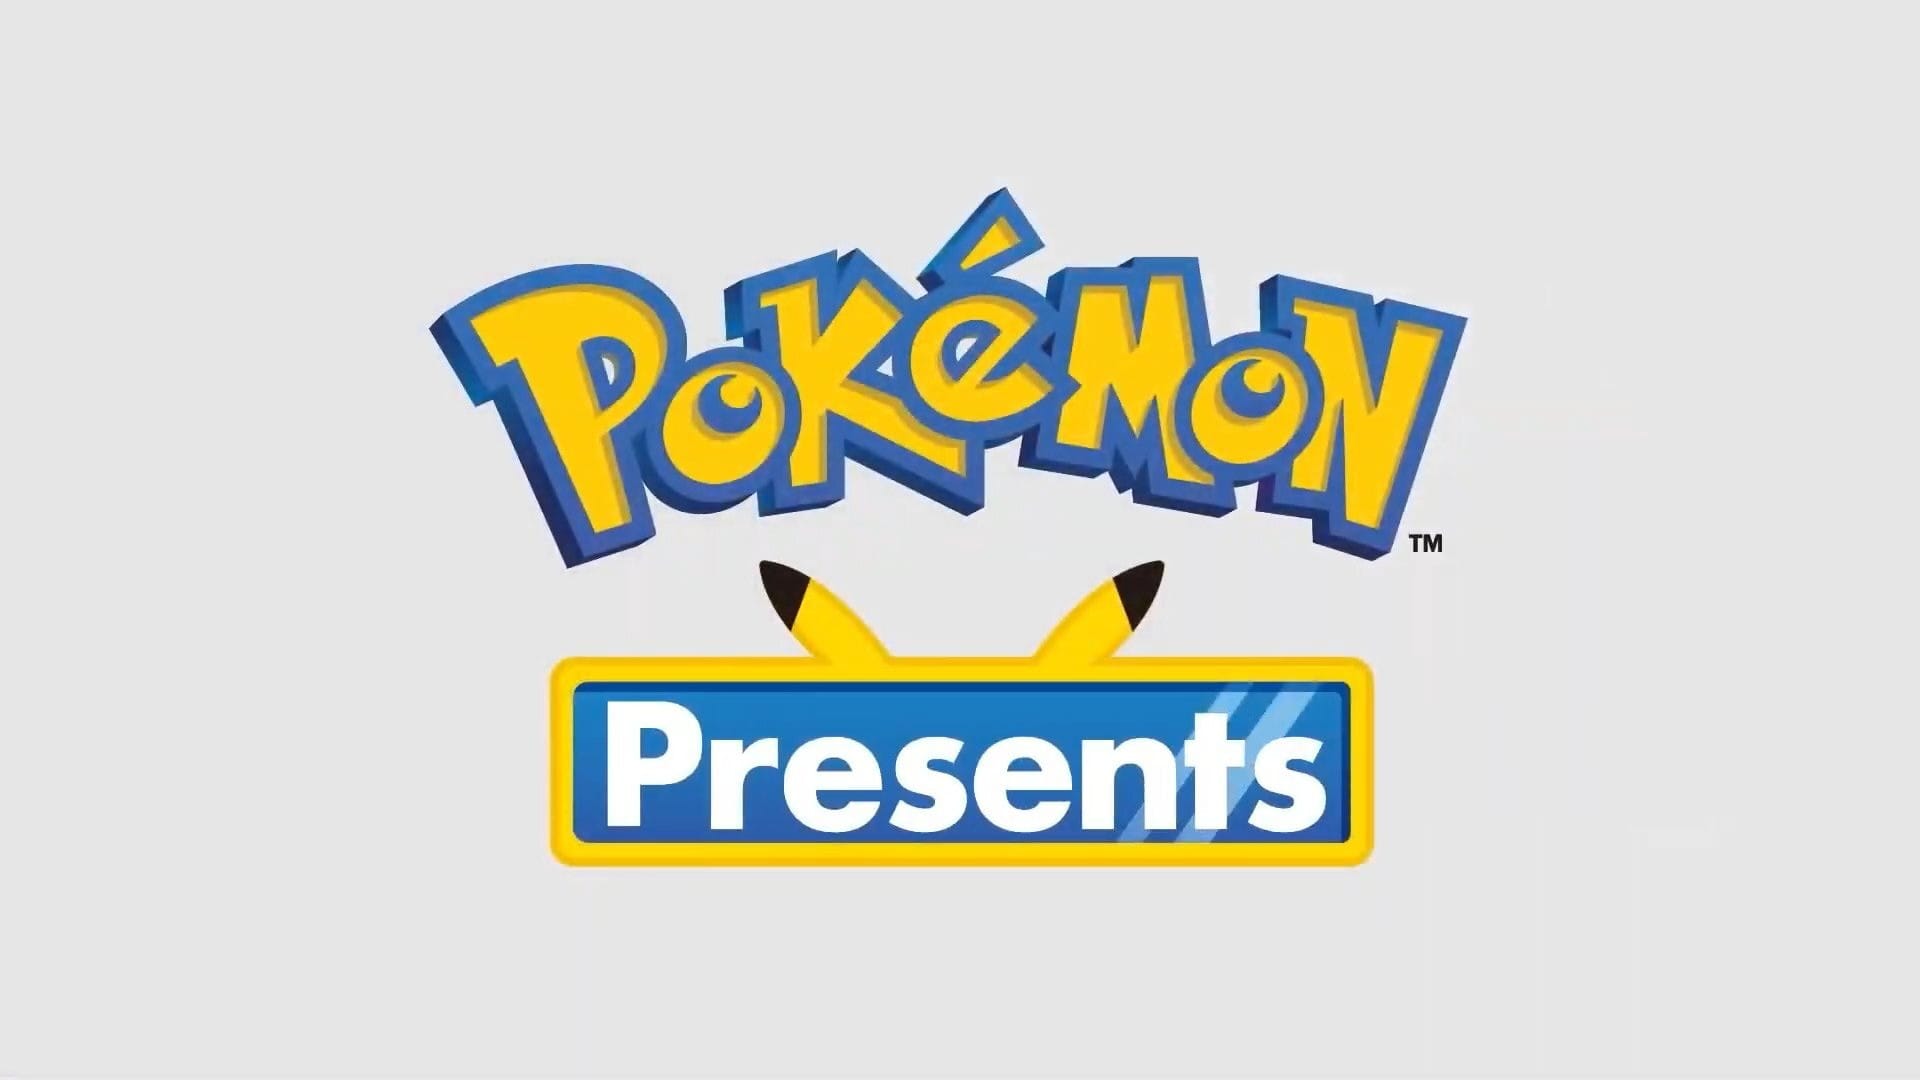 The Pokemon Presents logo